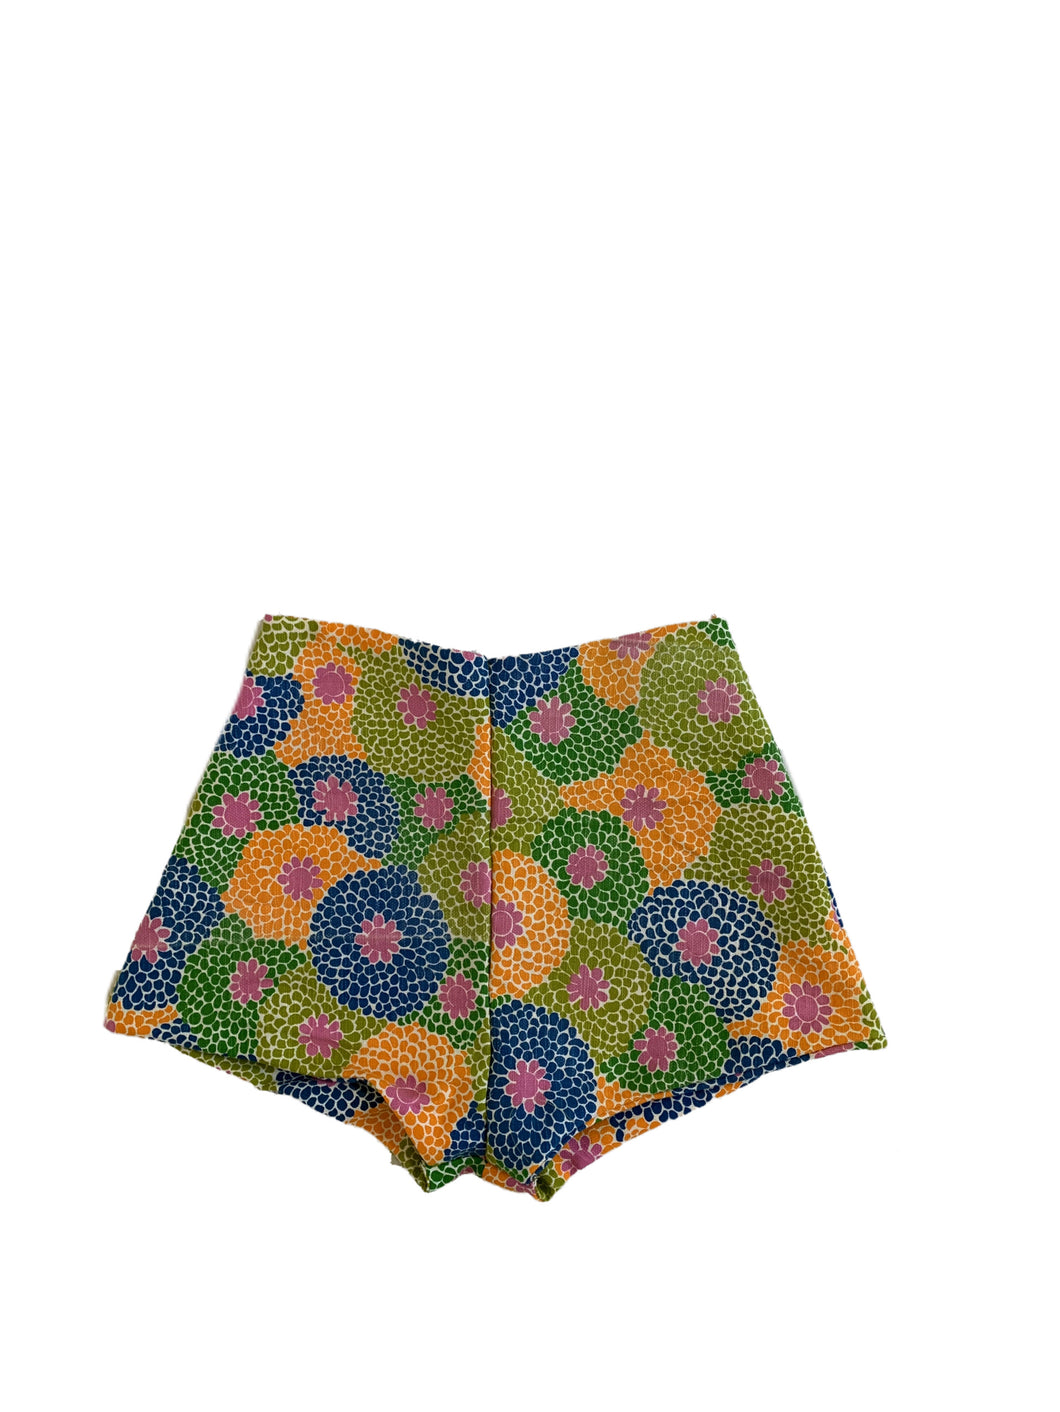 Vintage Dandelion Print Shorts